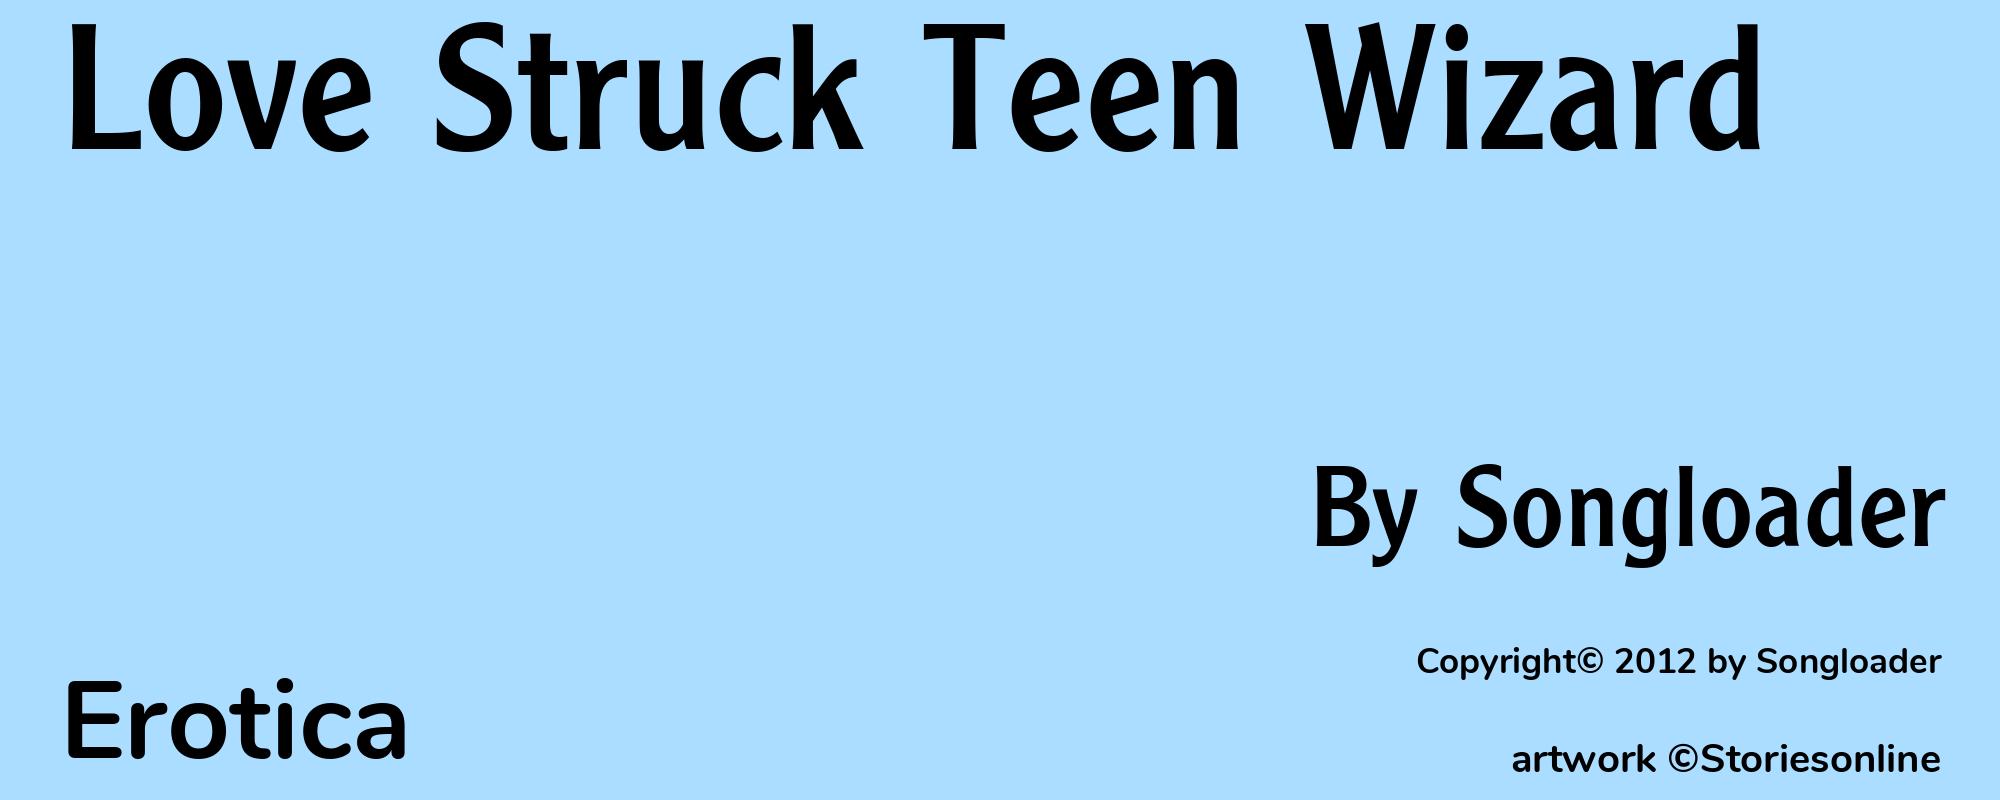 Love Struck Teen Wizard - Cover